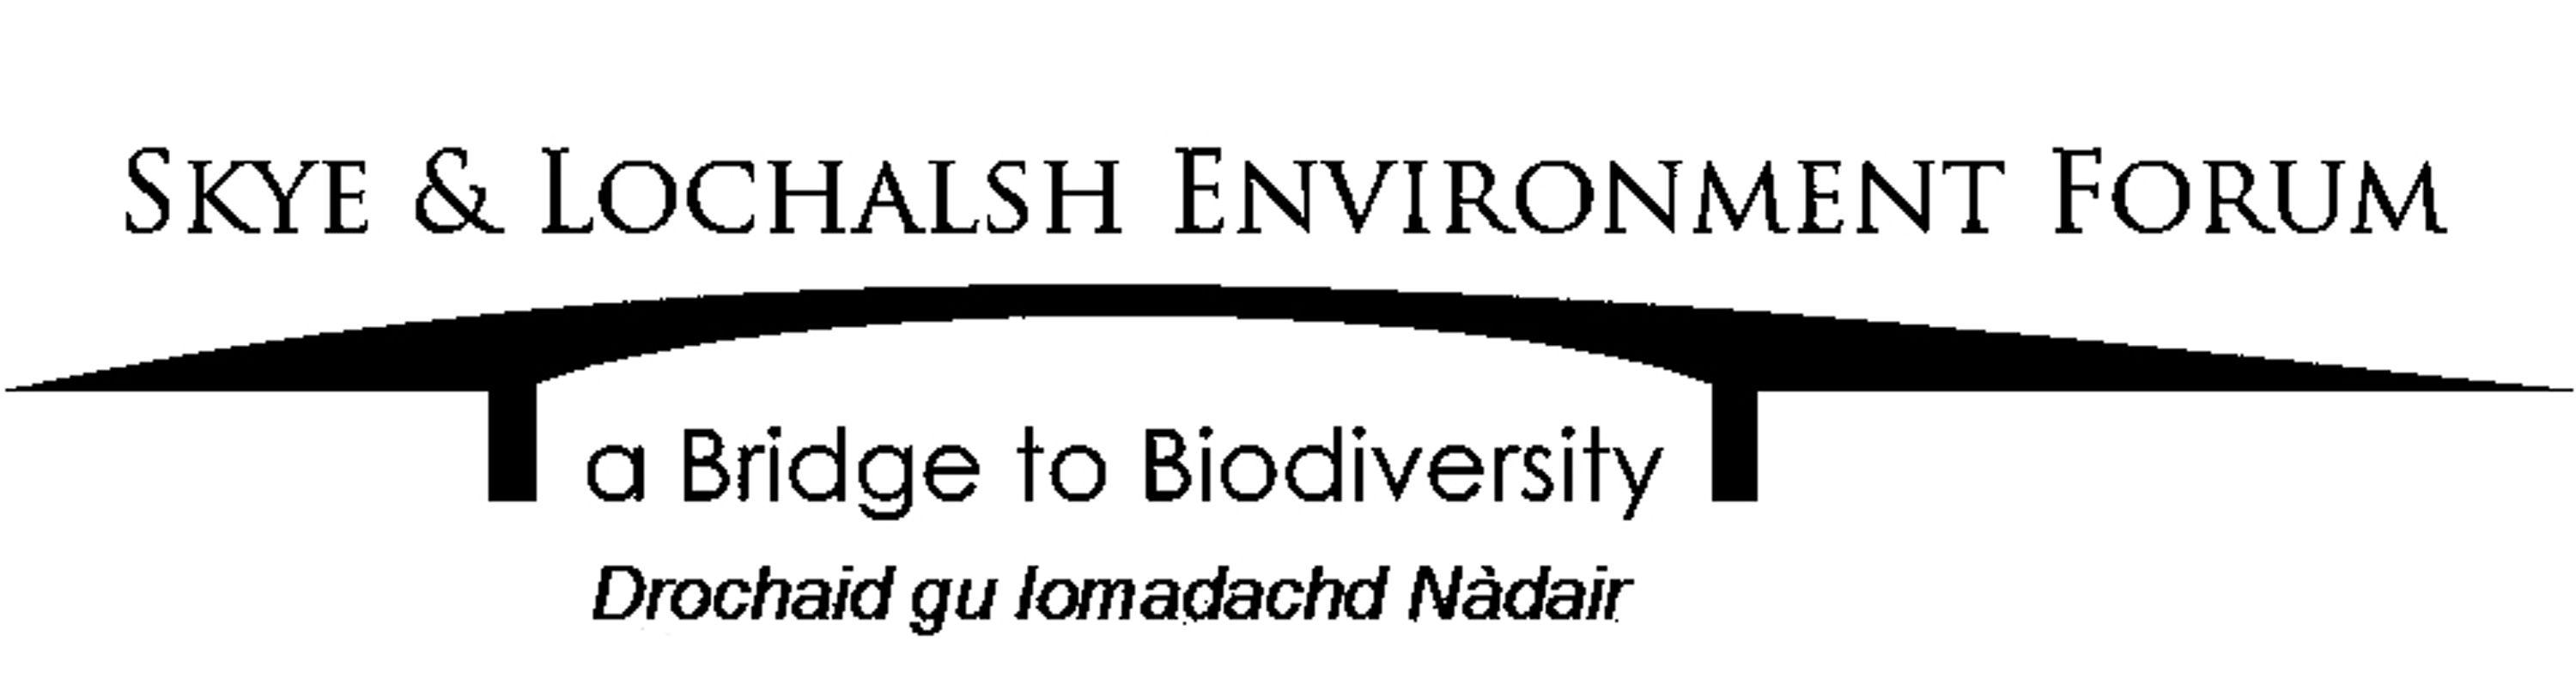 Black Green B Logo - Skye and Lochalsh Environment Forum - SLEF Logos